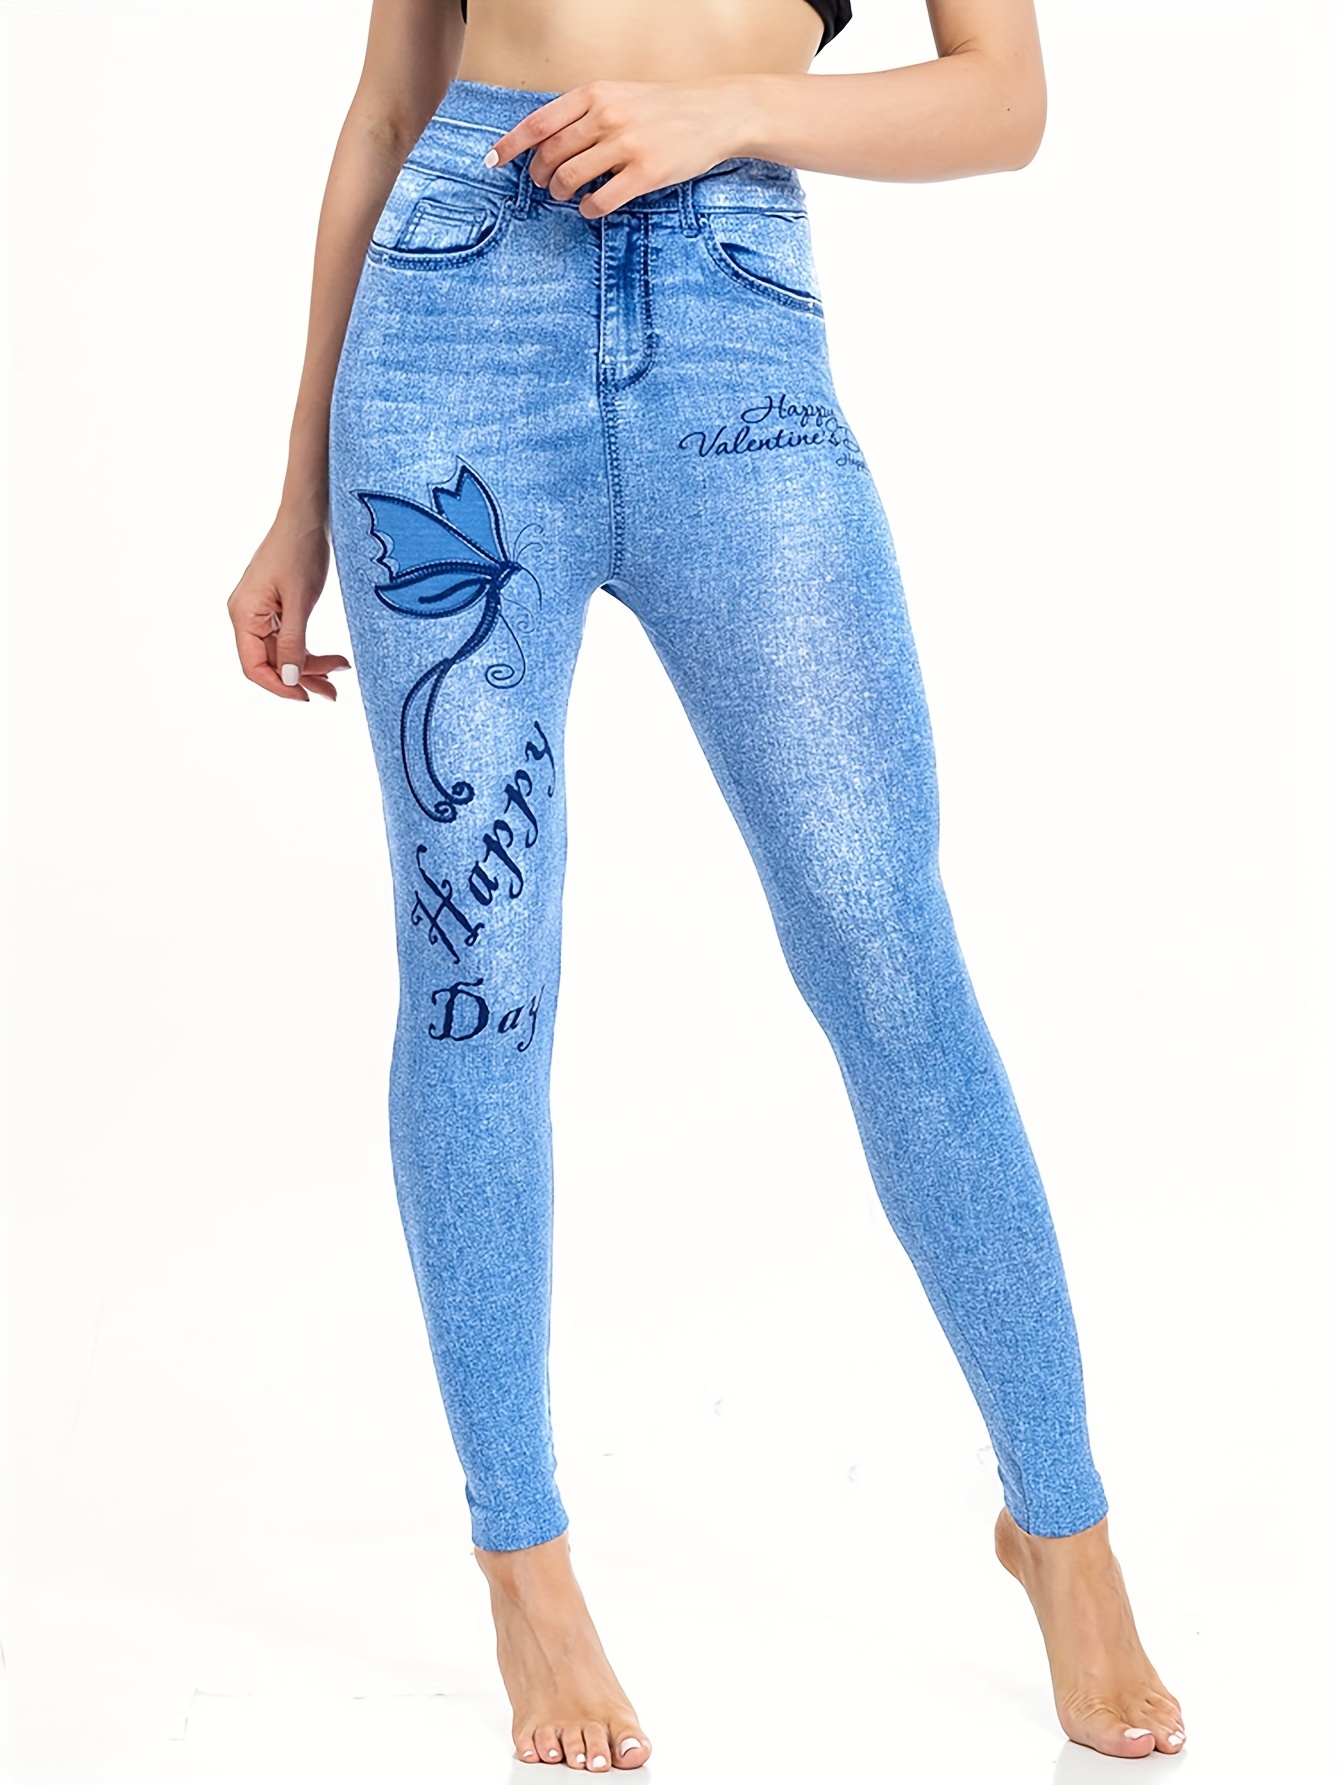 Shop Generic Women Print Denim Yoga Pant Sport Casual Jeans Leggings Girl Plus  Size Elastic Slim Pants High Waist Tights Fitness Gym Clothing(#1604 denim)  Online